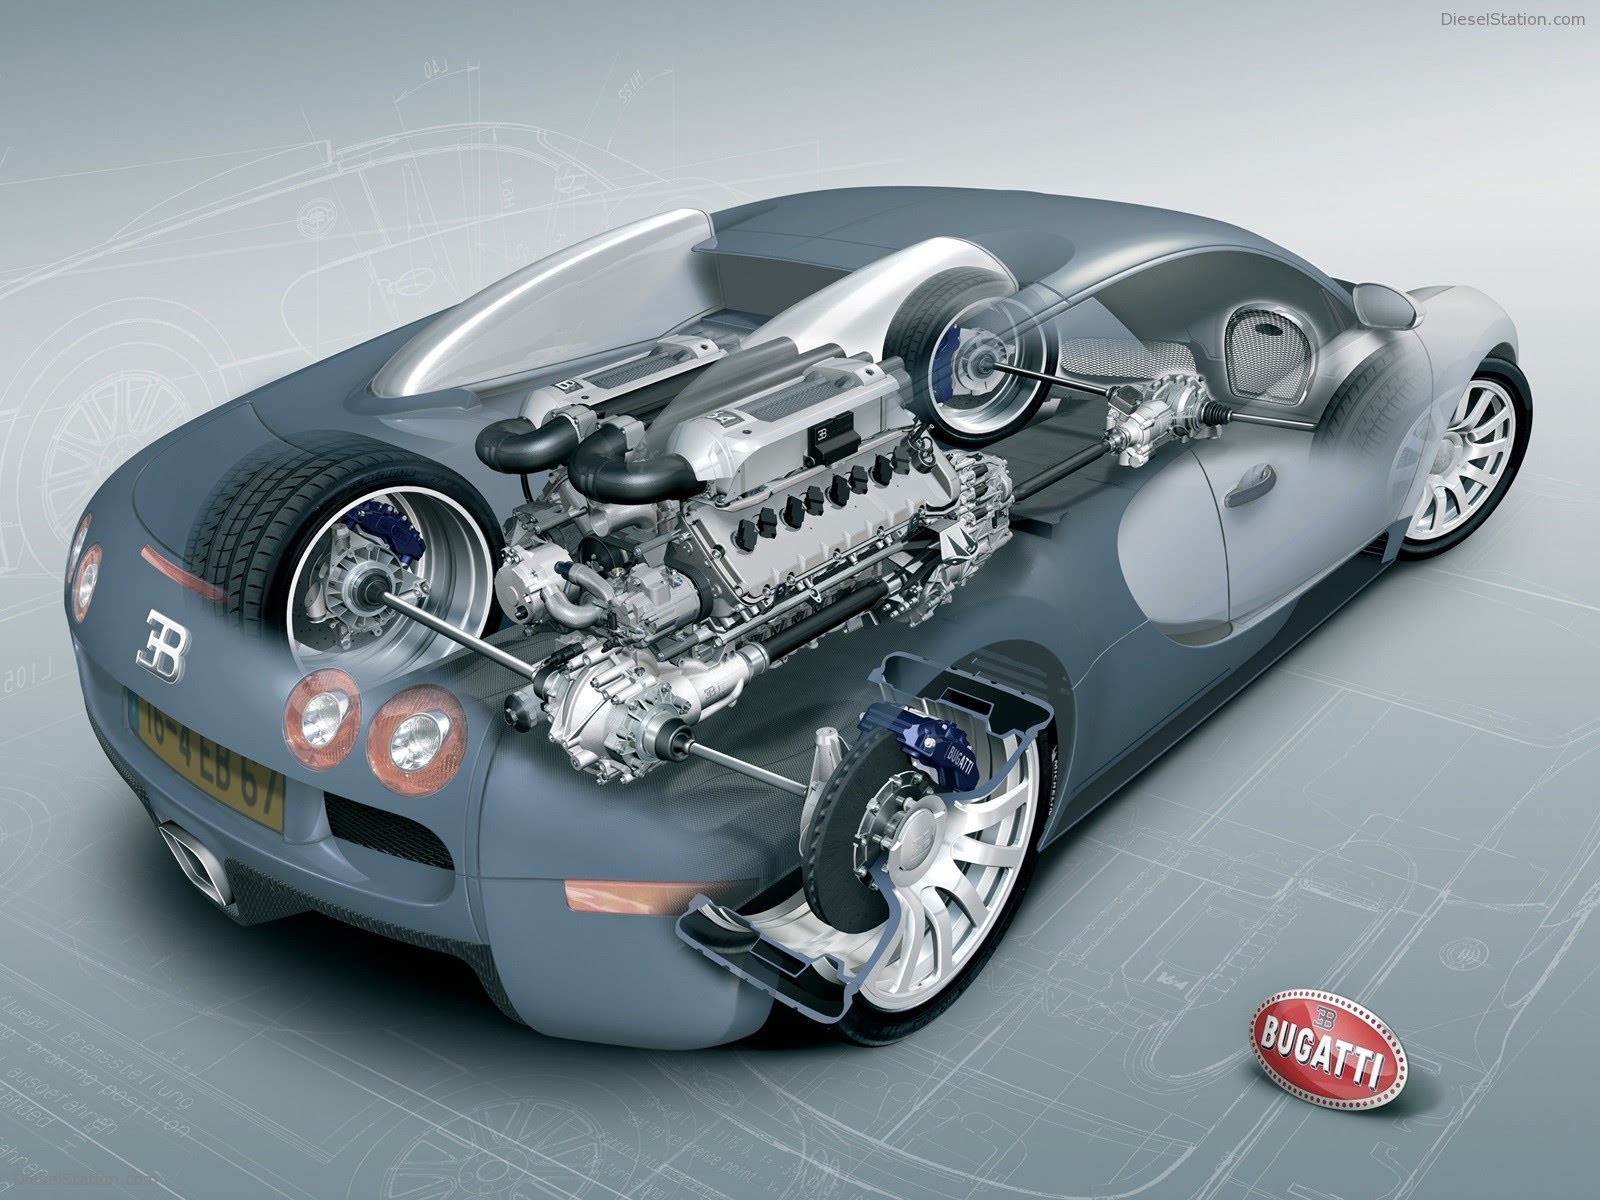 Bugatti Veyron - Amazing Engineering[Full